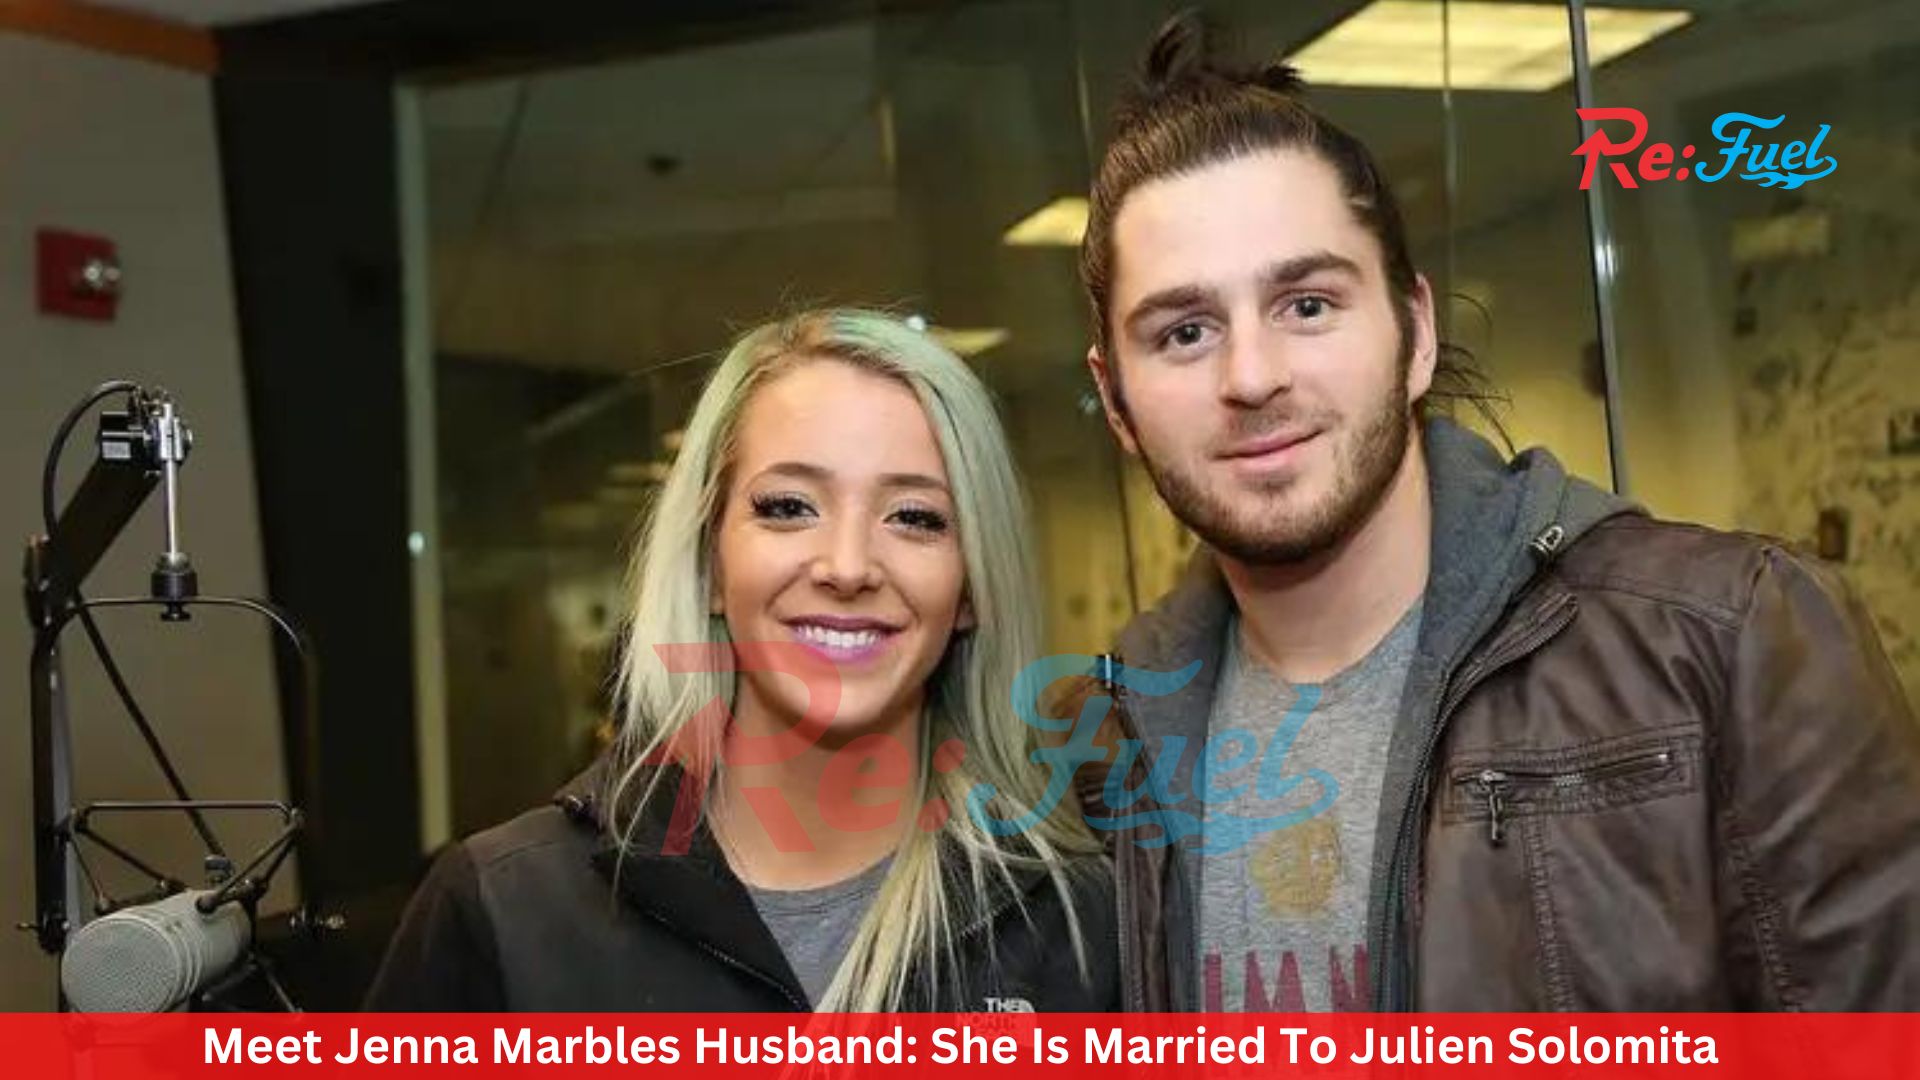 Meet Jenna Marbles Husband: She Is Married To Julien Solomita